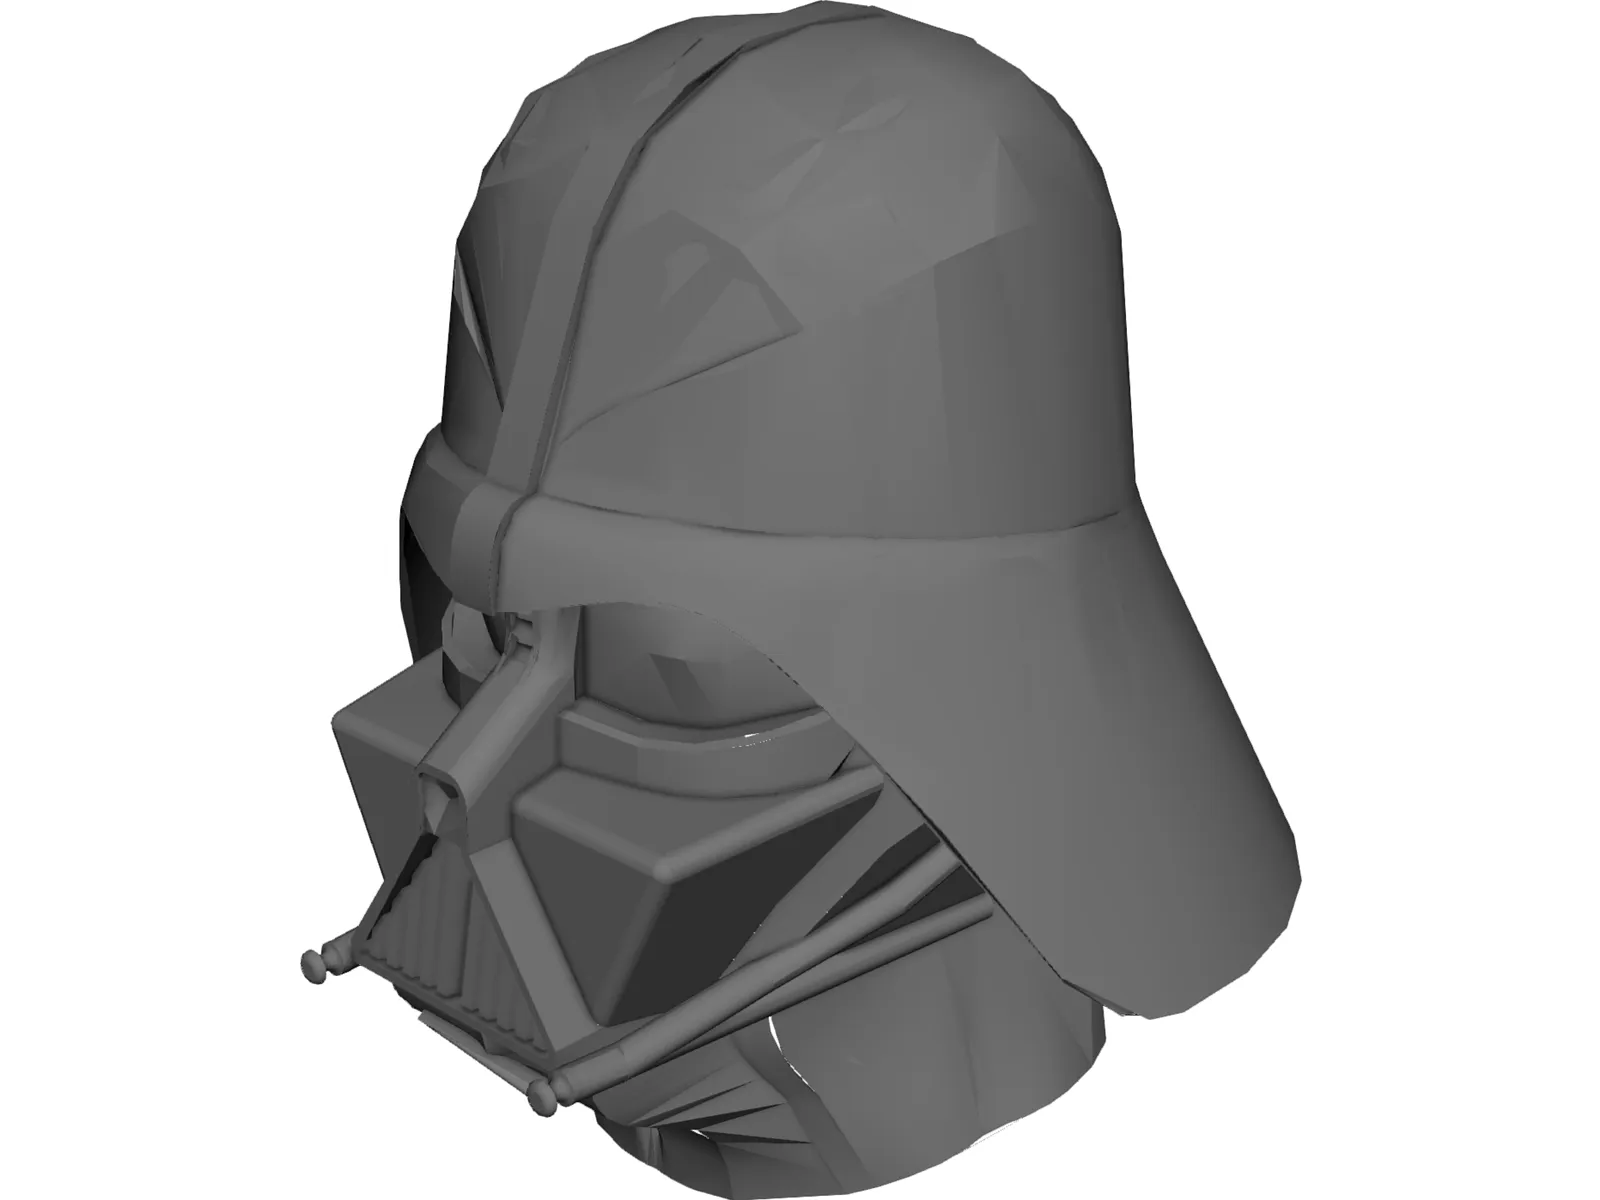 Star Wars Darth Vader Mask 3D Model